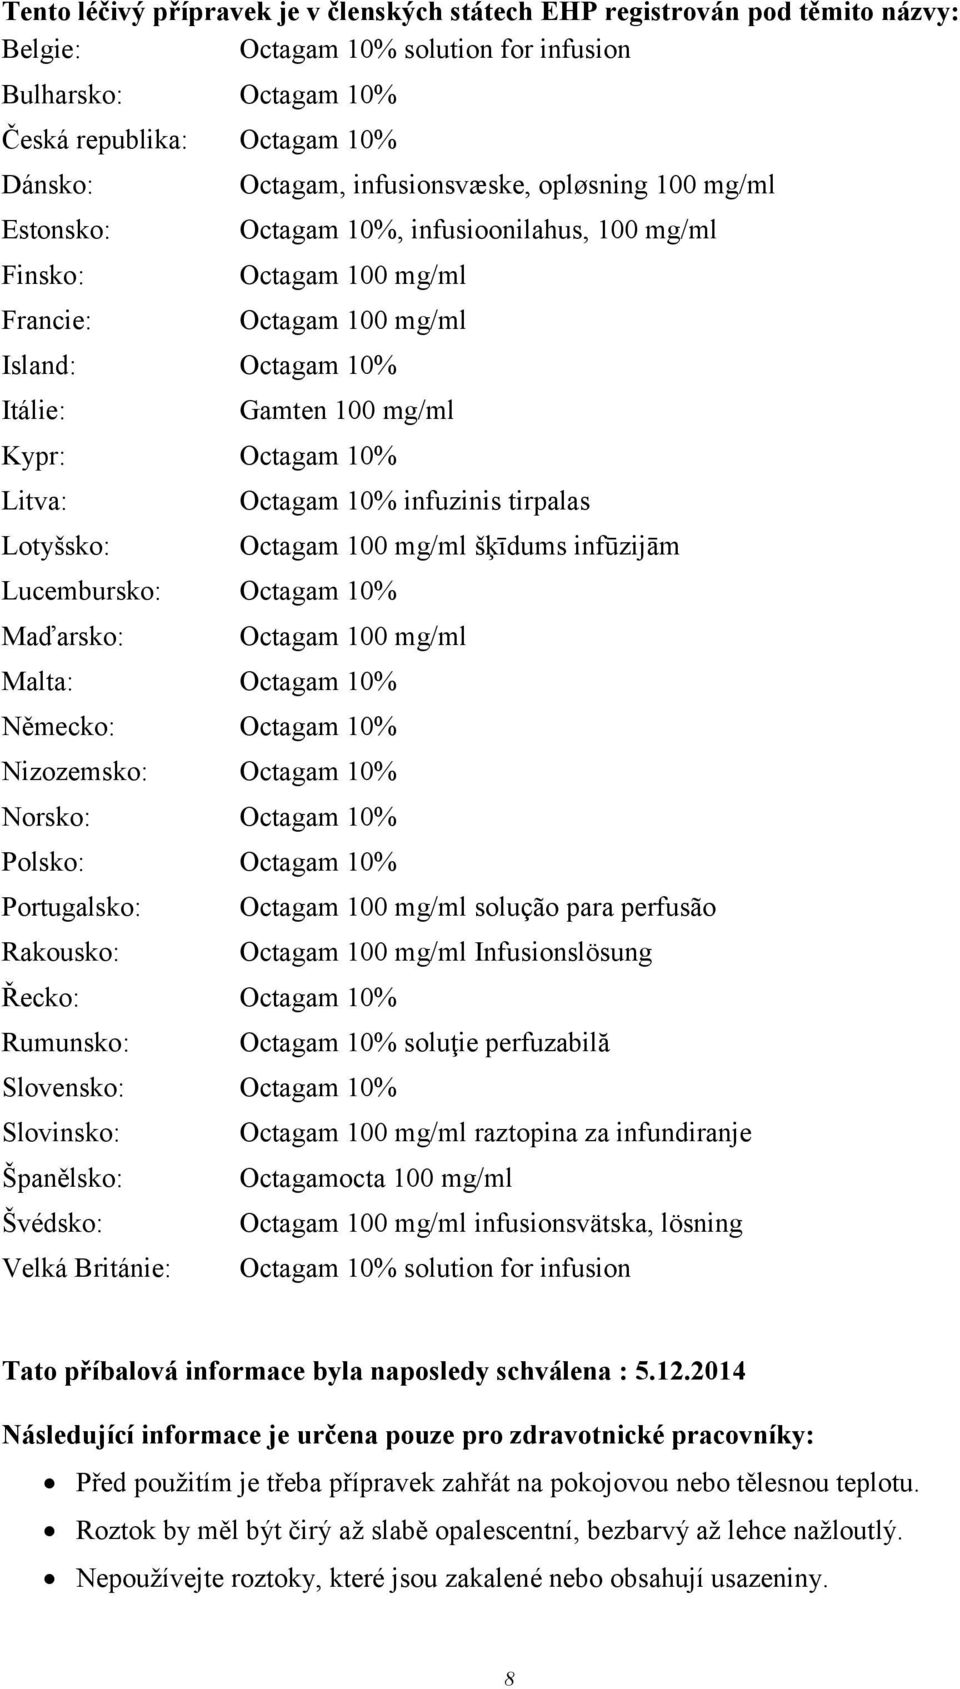 Lotyšsko: Lucembursko: Octagam 10% Maďarsko: Octagam 10% infuzinis tirpalas Octagam 100 mg/ml šķīdums infūzijām Octagam 100 mg/ml Malta: Octagam 10% Německo: Octagam 10% Nizozemsko: Octagam 10%